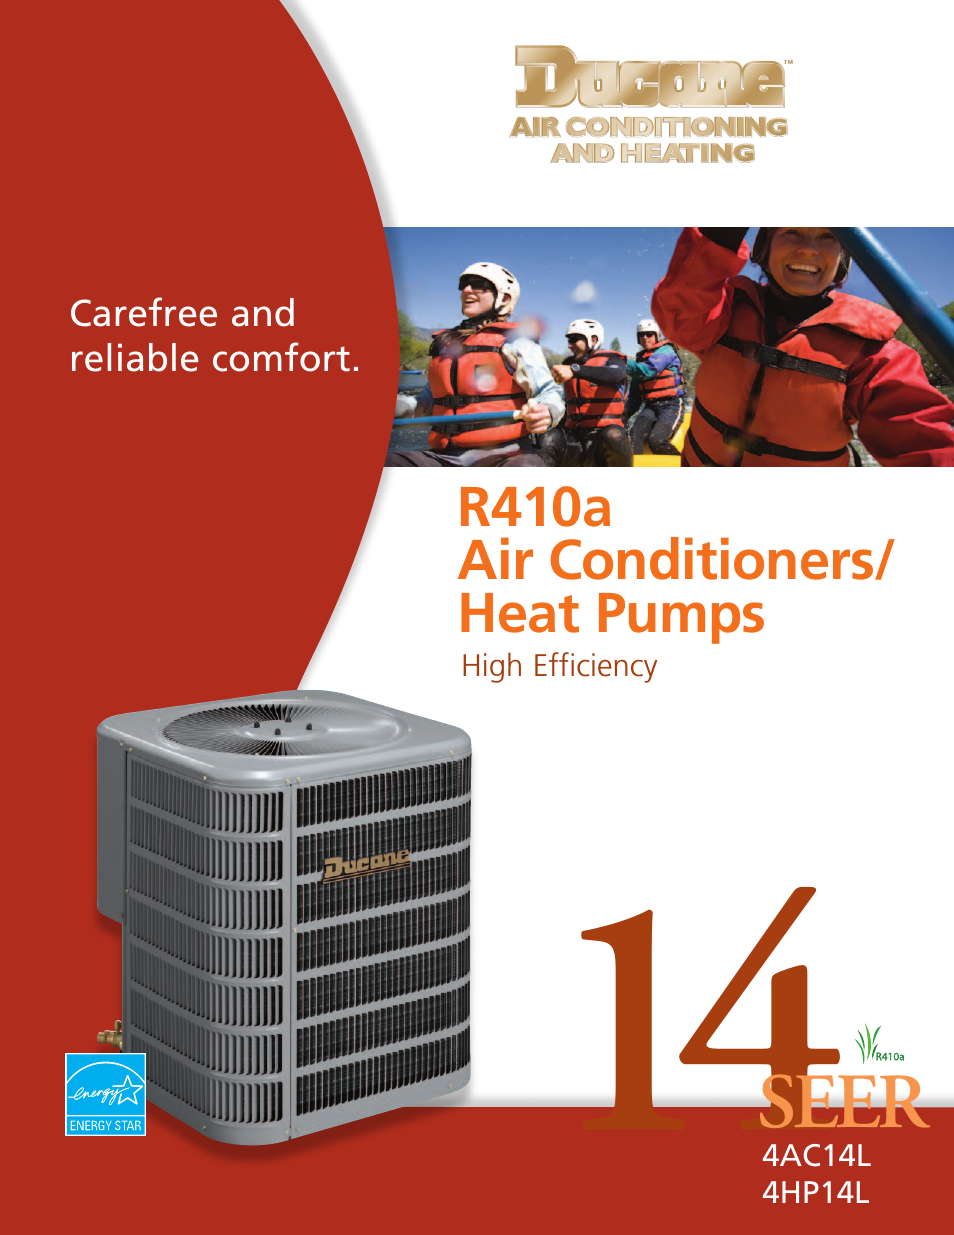 Air Conditioners/Heat Pumps 4HP14L